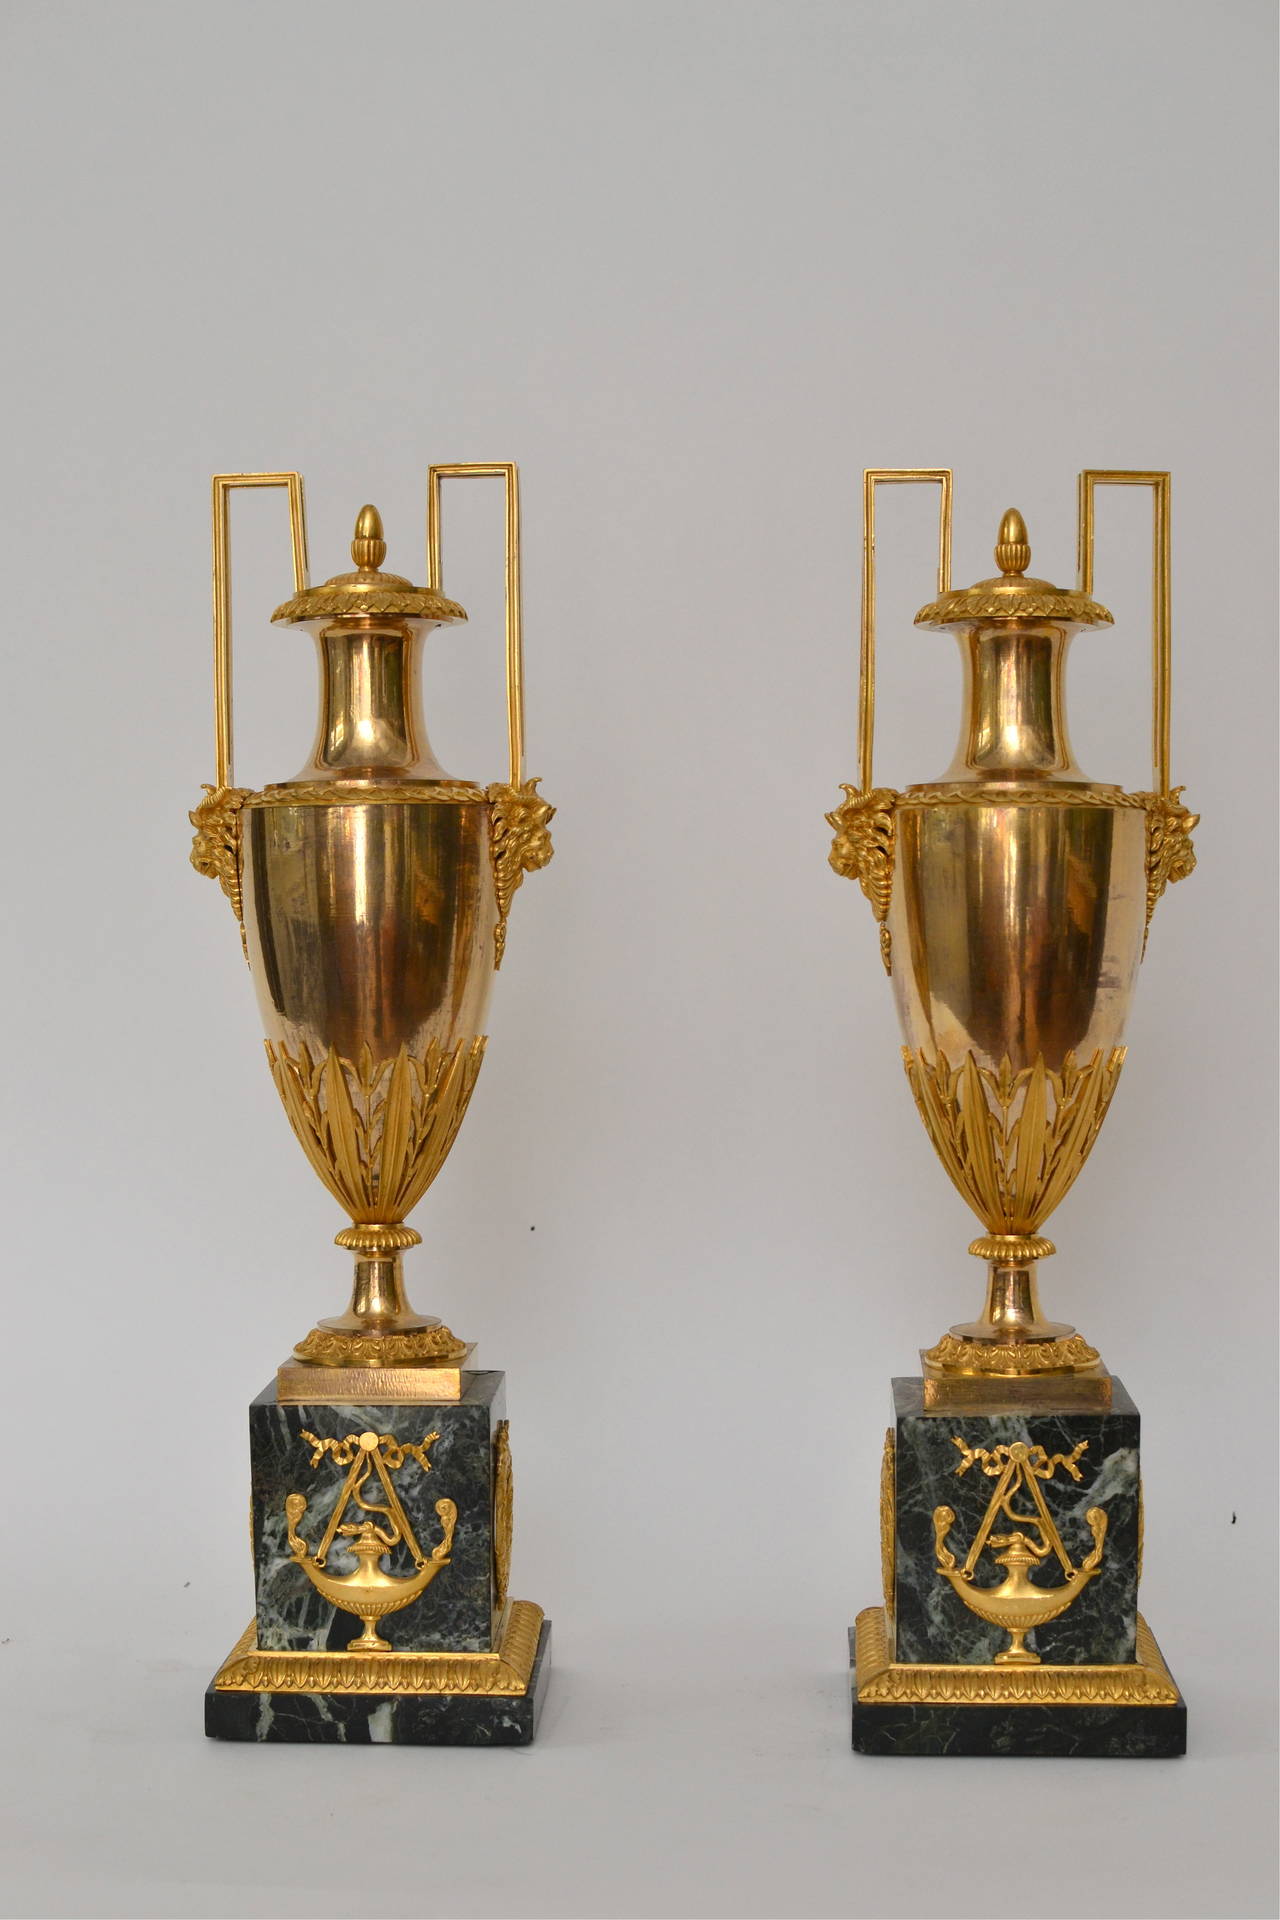 A fine pair of Empire gilt bronze and marble vases, Paris, circa 1810.